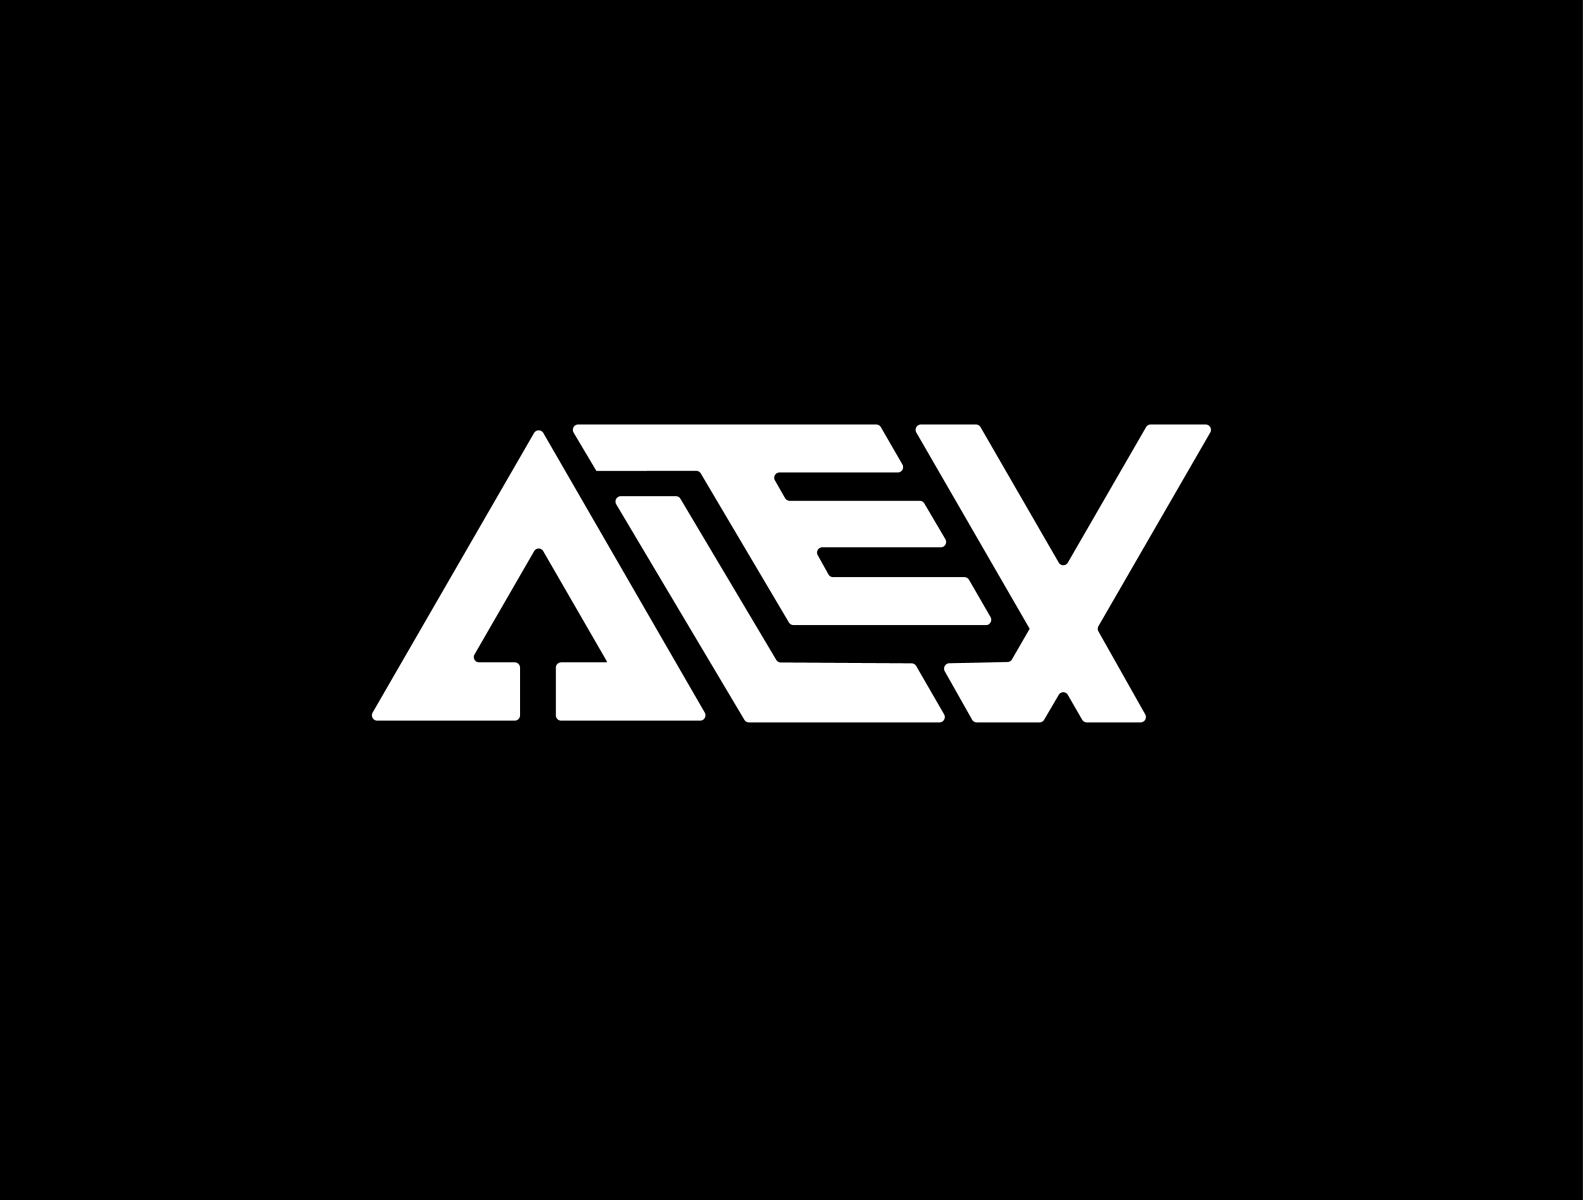 Alex Full Intro Music - YouTube